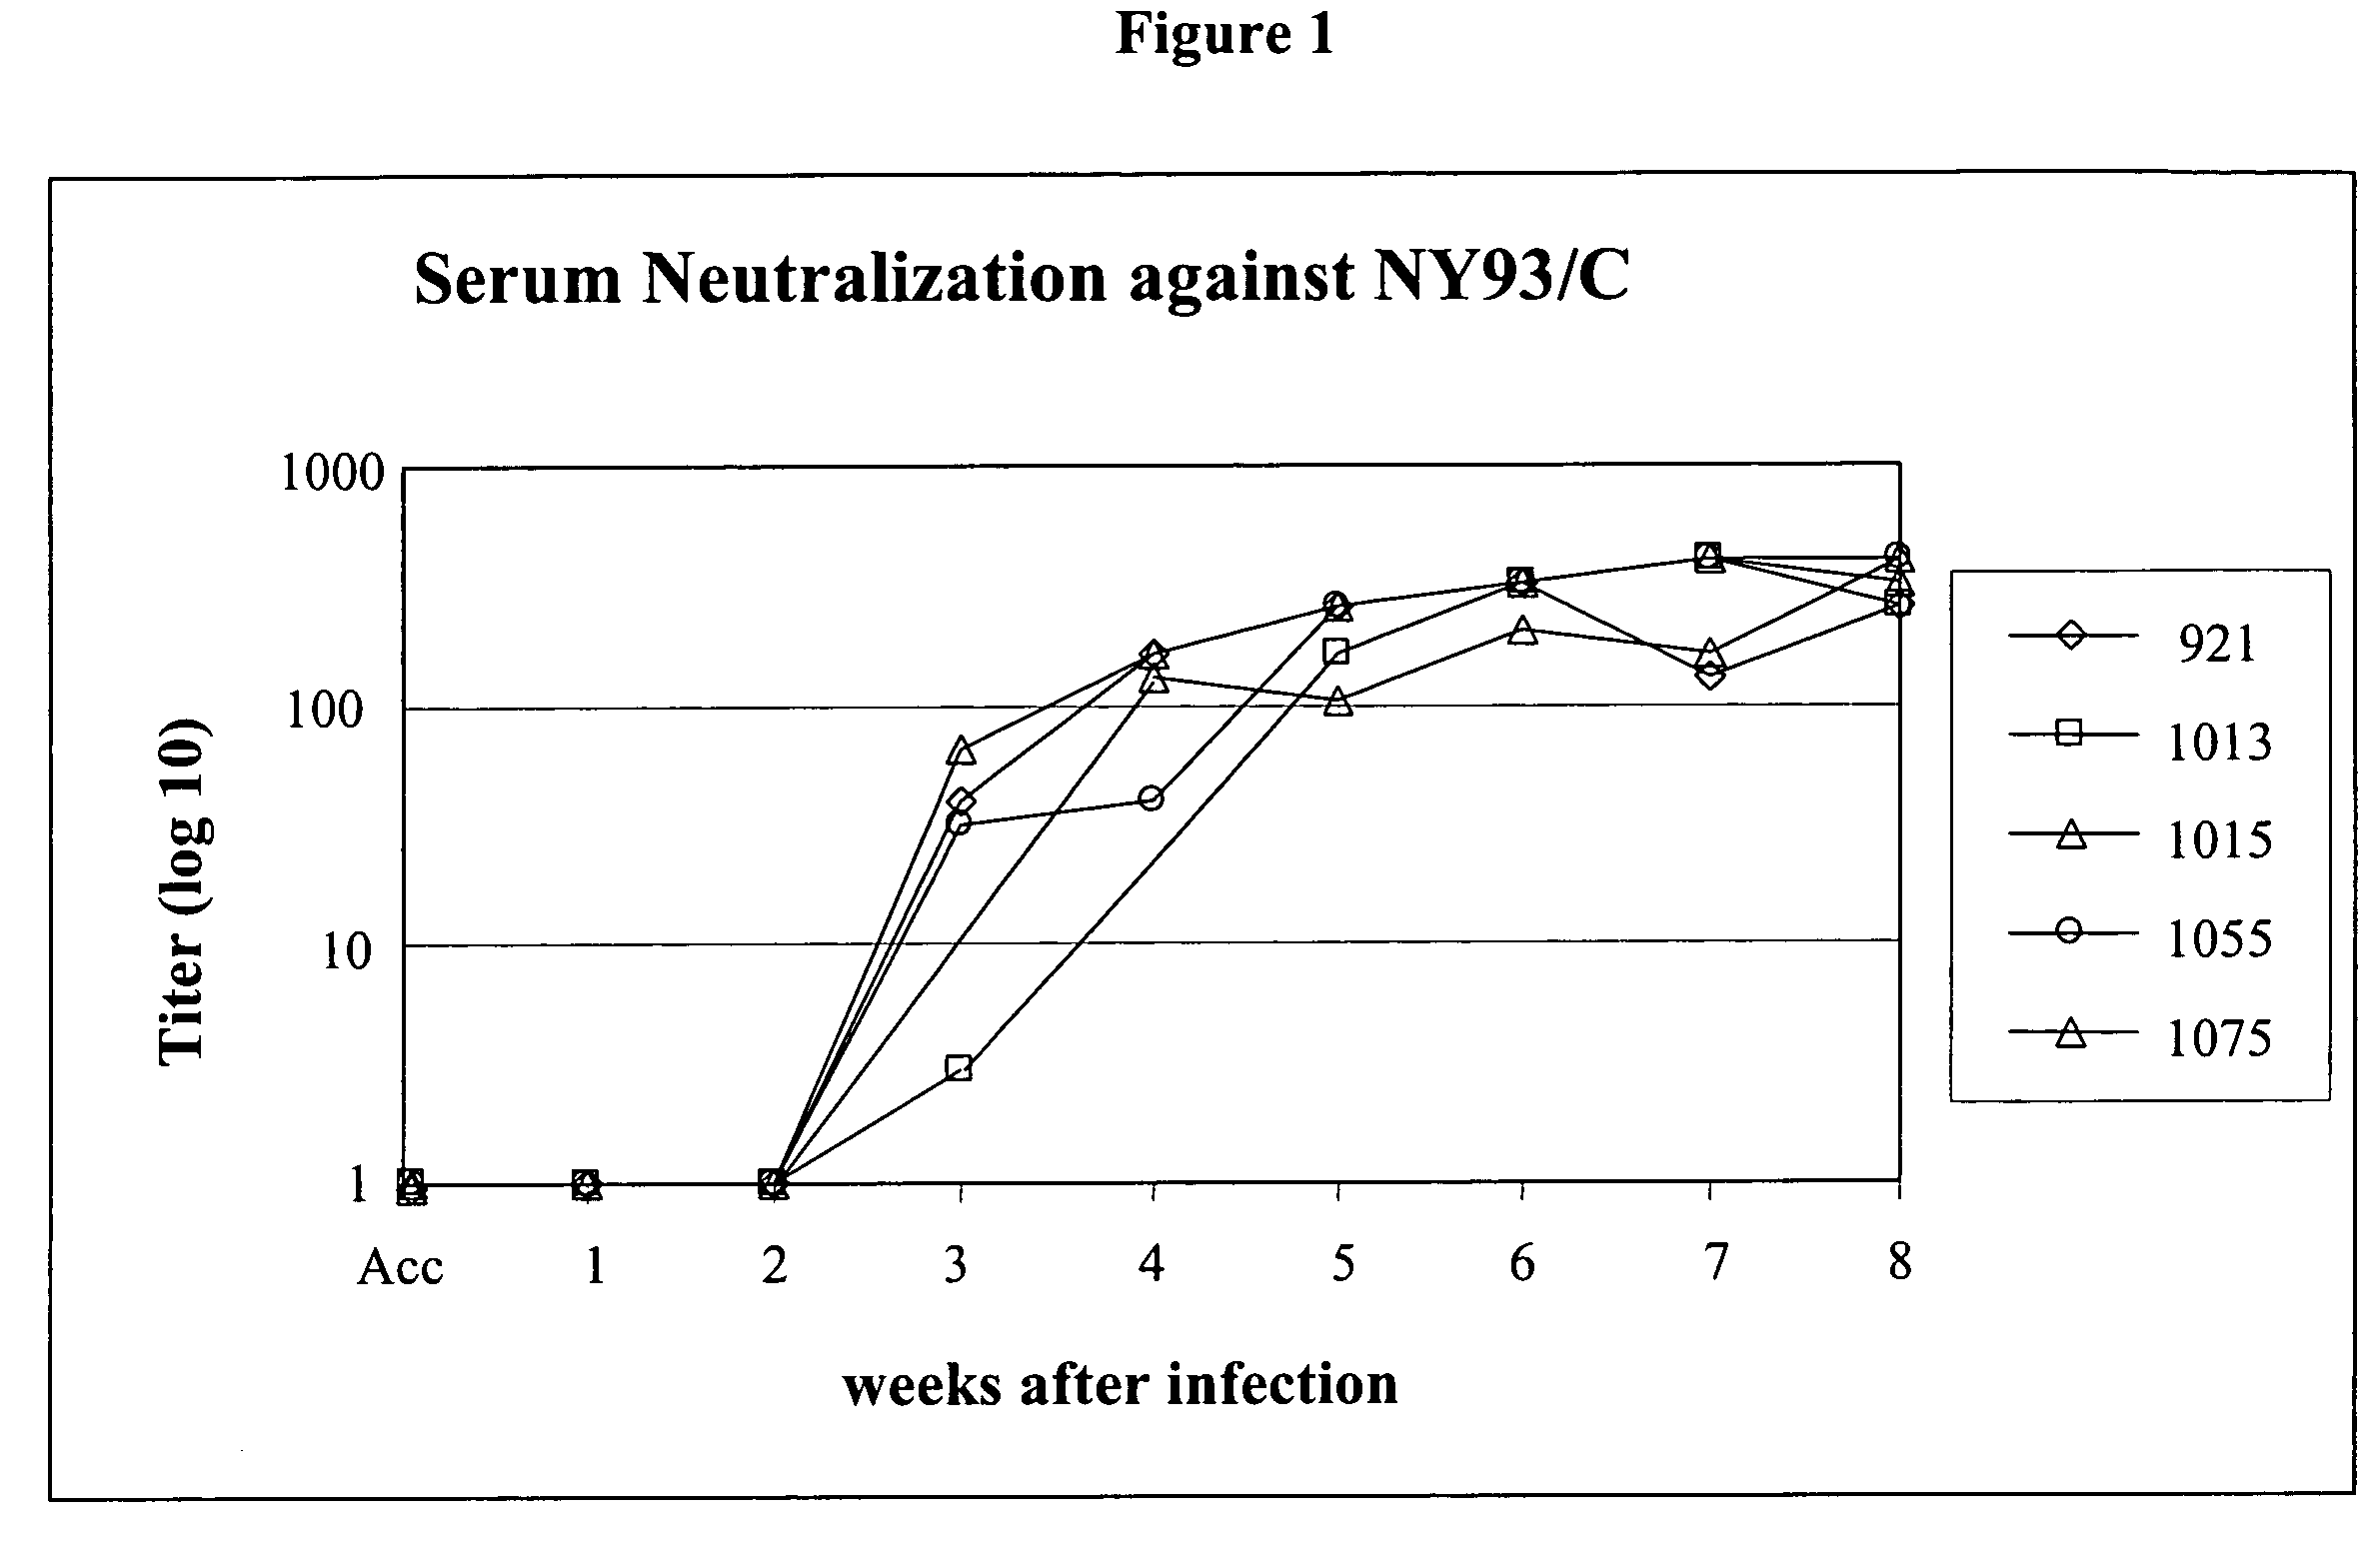 Vaccine comprising an attenuated pestivirus